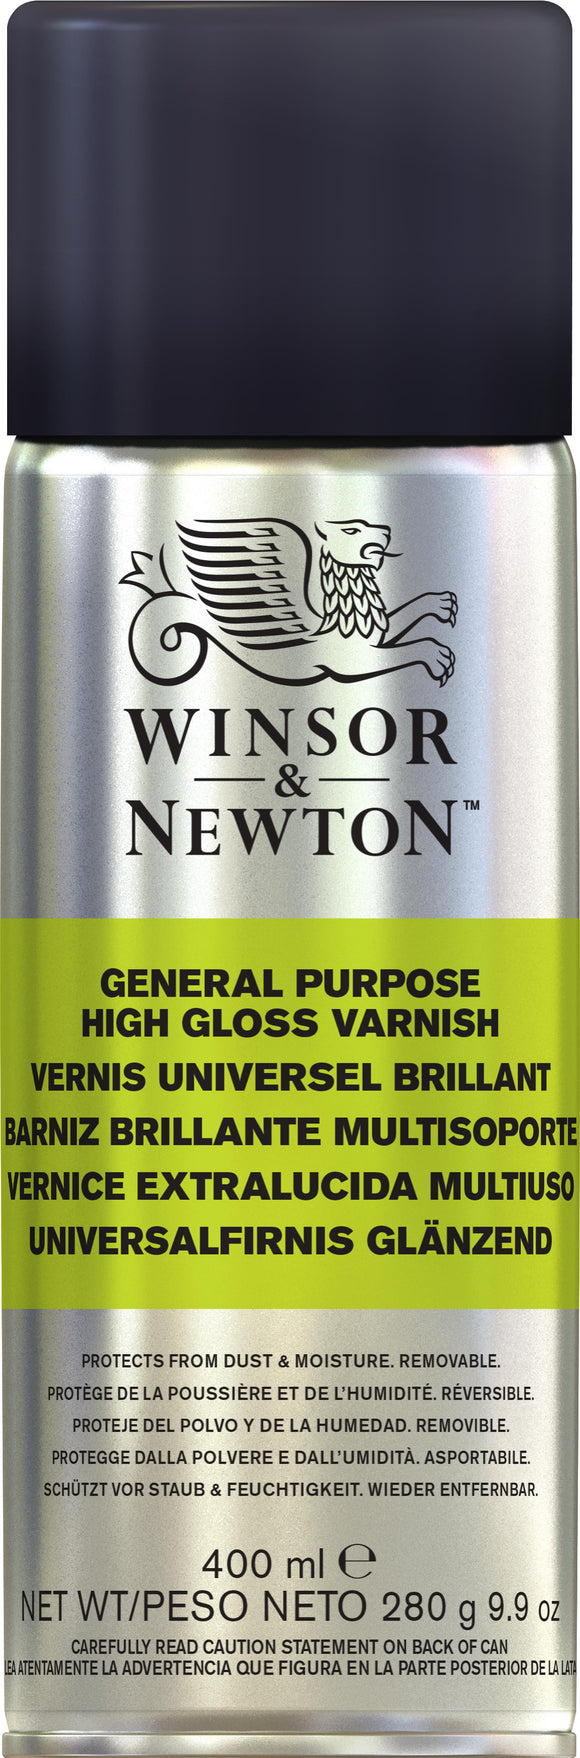 Winsor & Newton General Purpose High Gloss Varnish Spray 400Ml